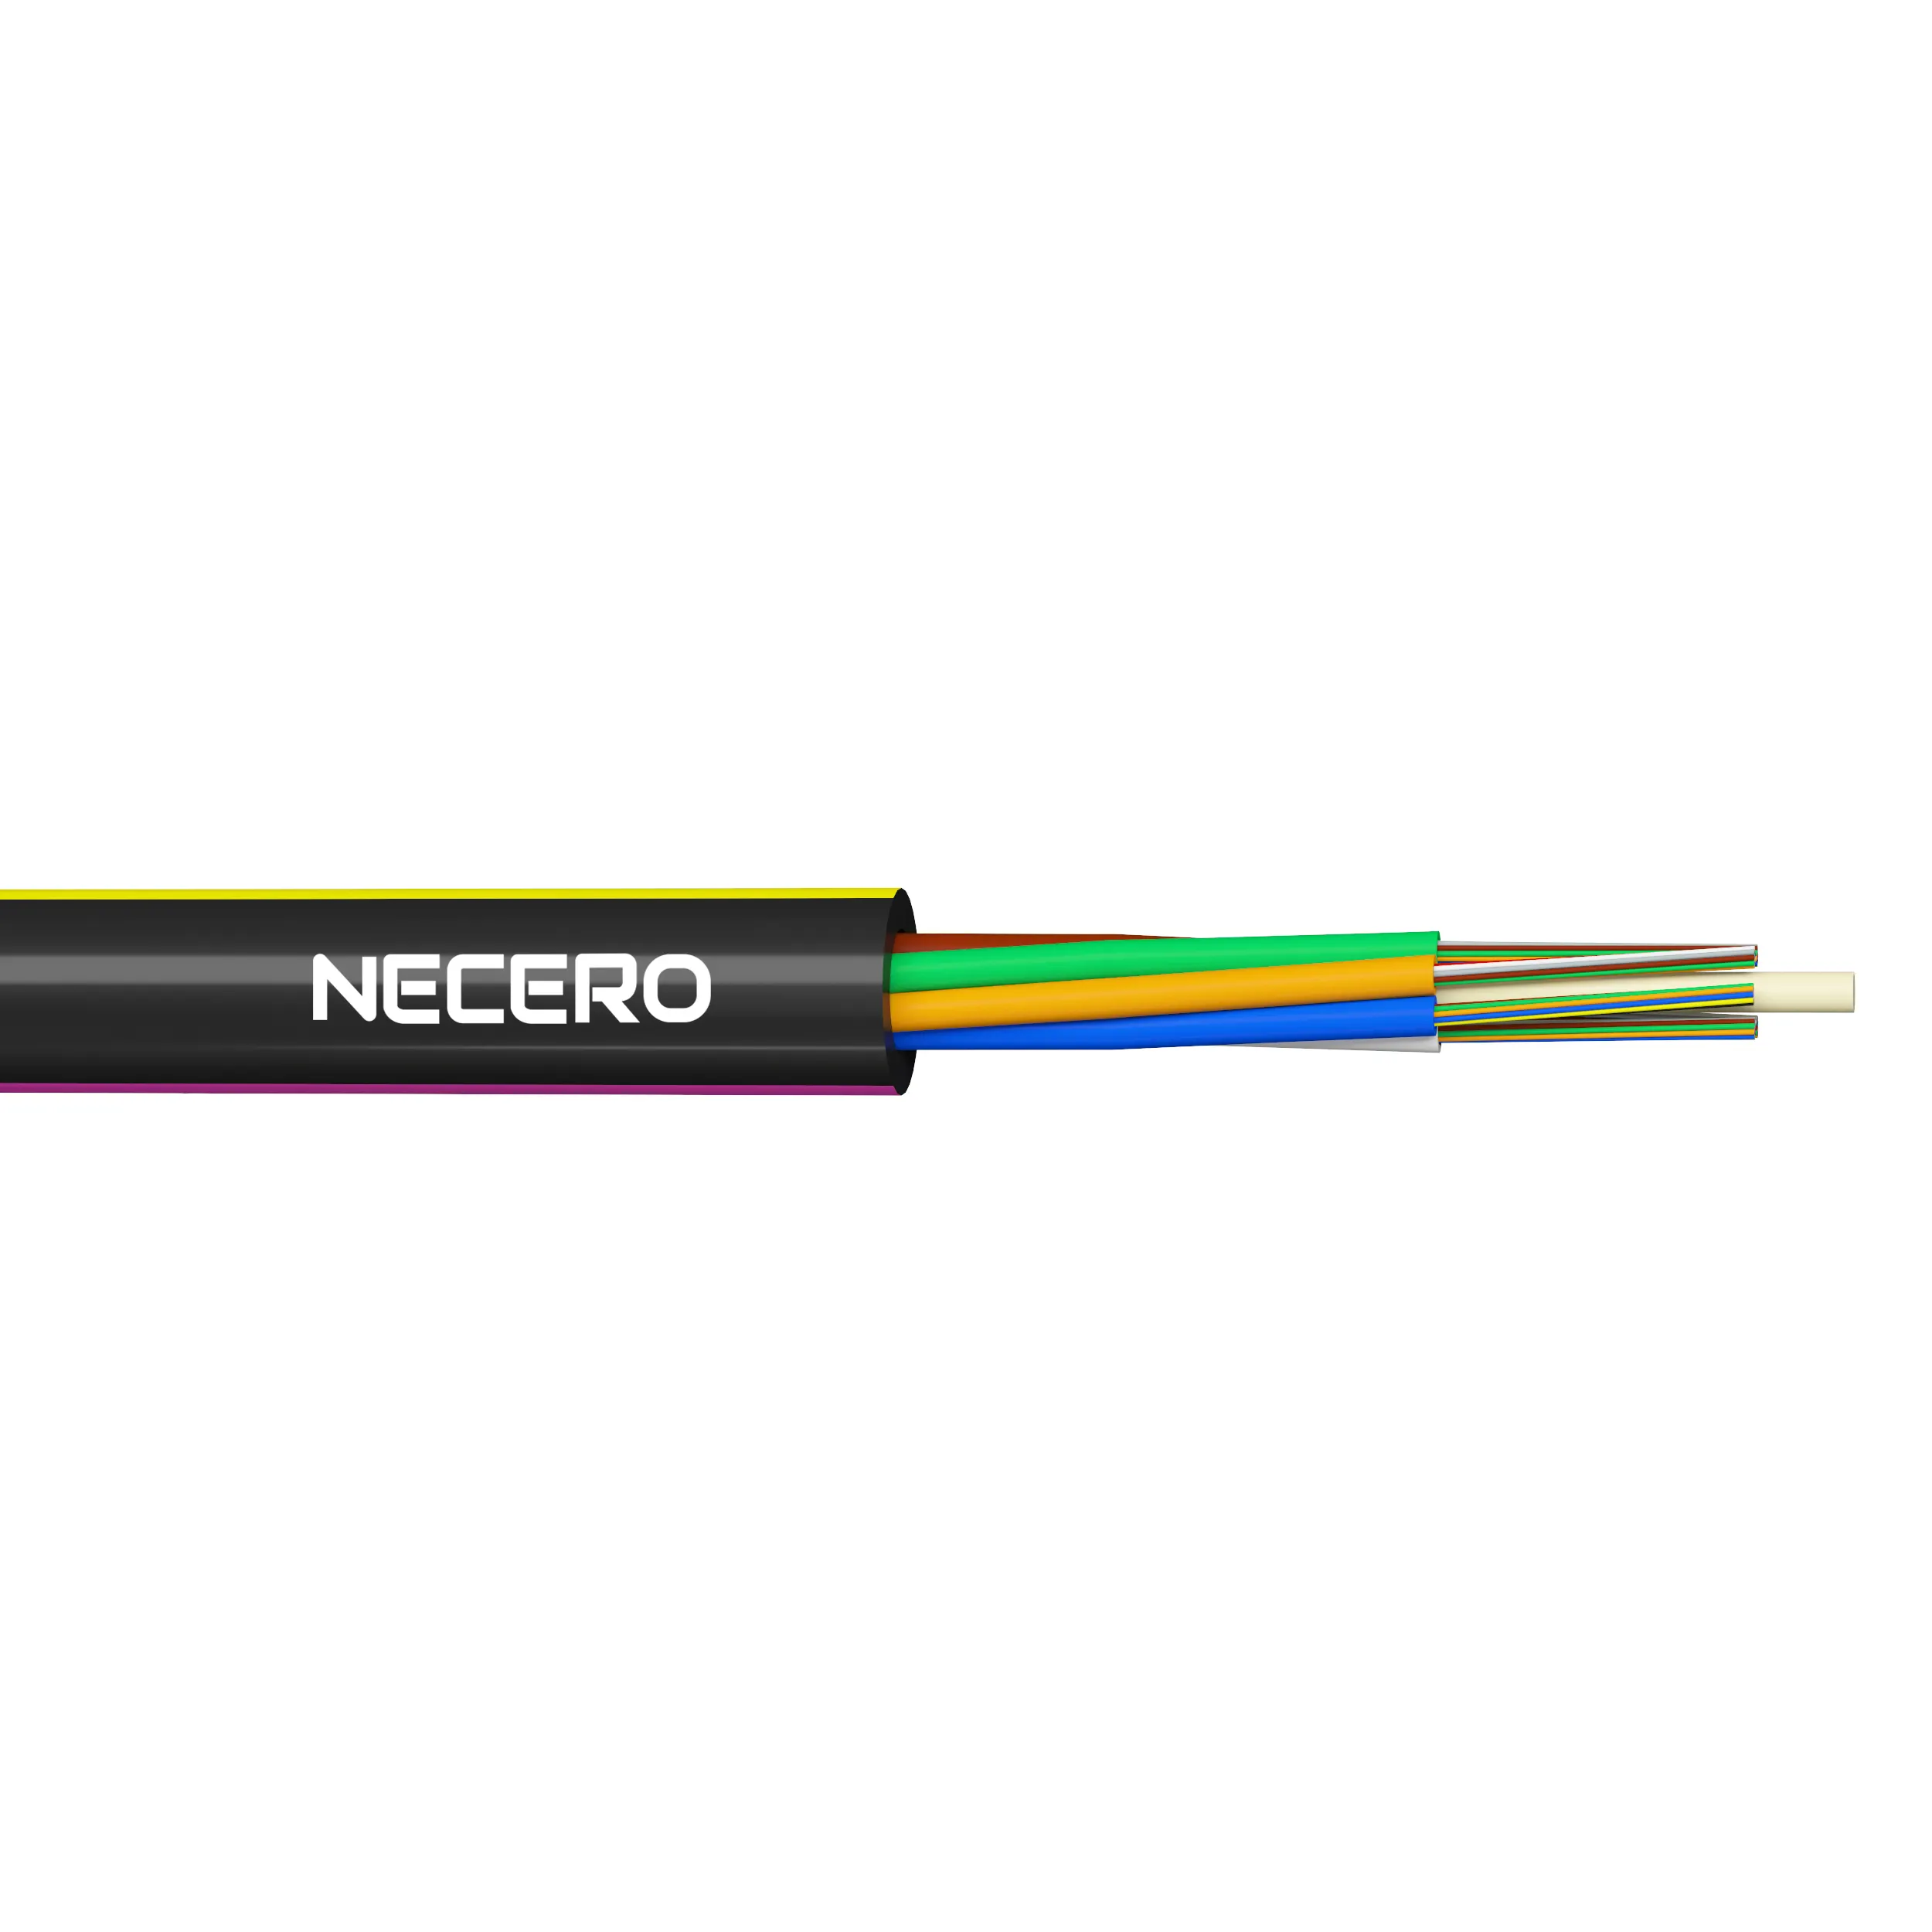 Necero 20 years fibra optica OEM factory high strength loose tube protect Micro 12 24 36 48 72 96 core GYFTY fiber optic cable